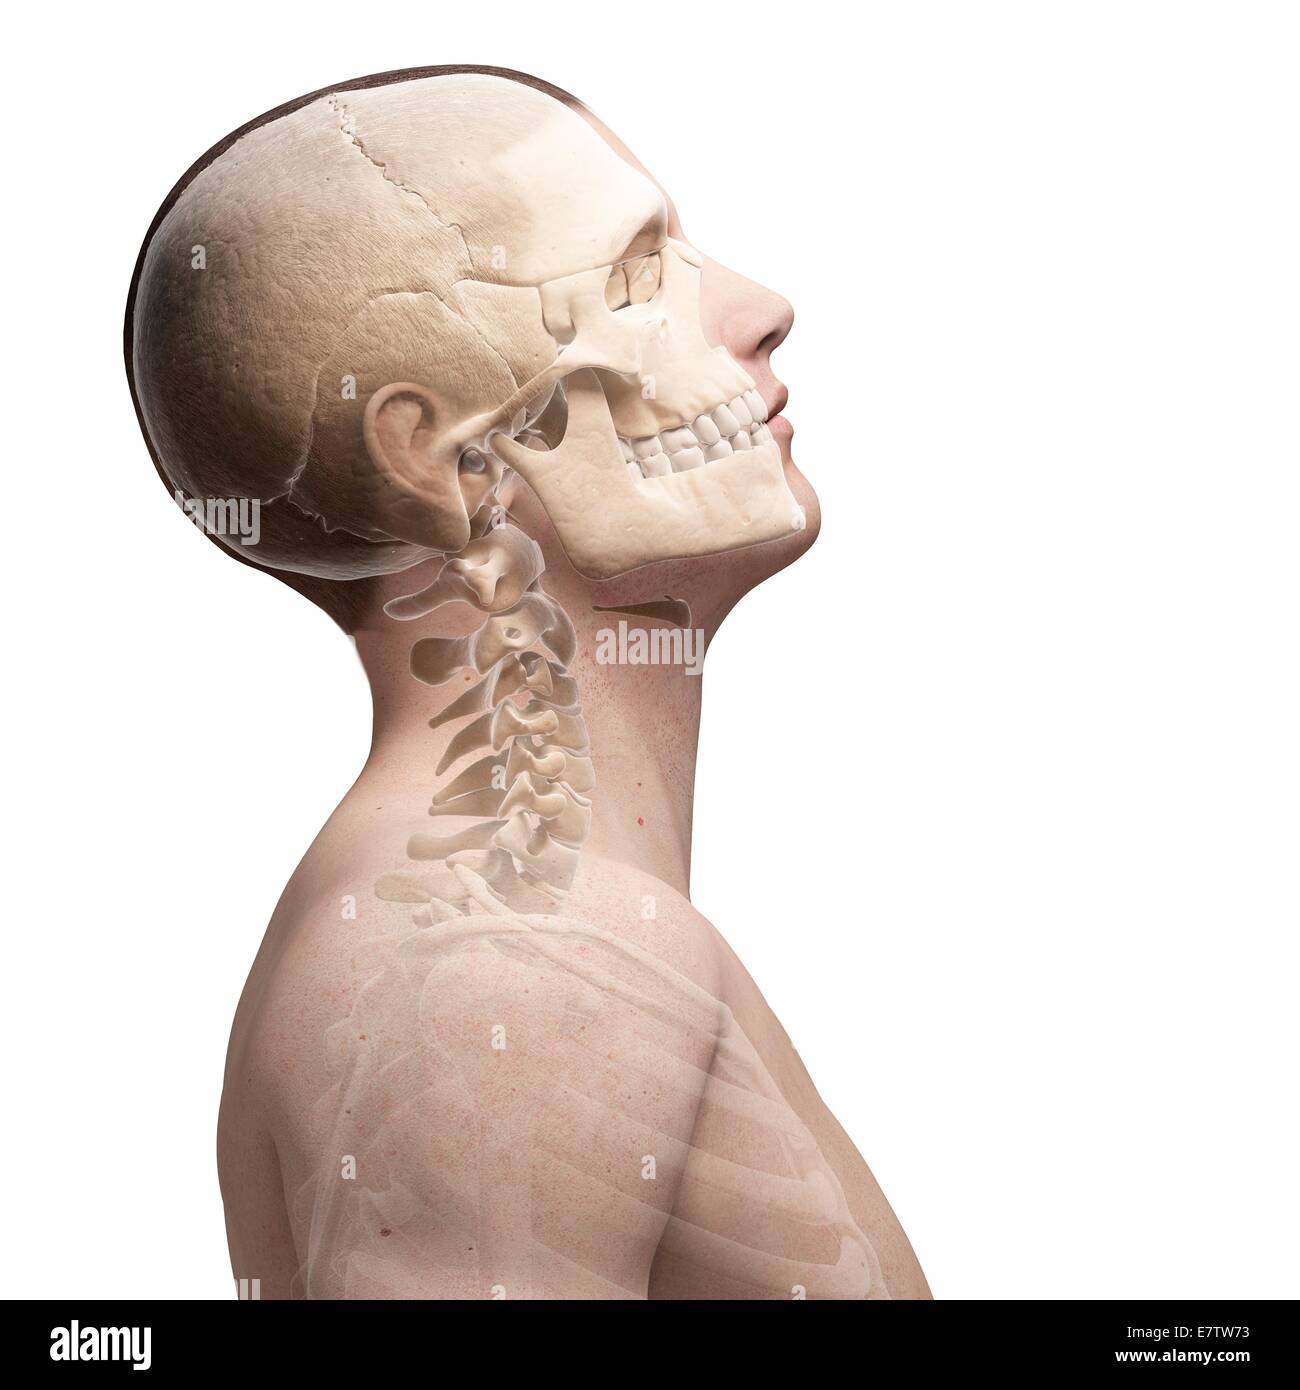 Human skull and neck bones, computer artwork. Stock Photo